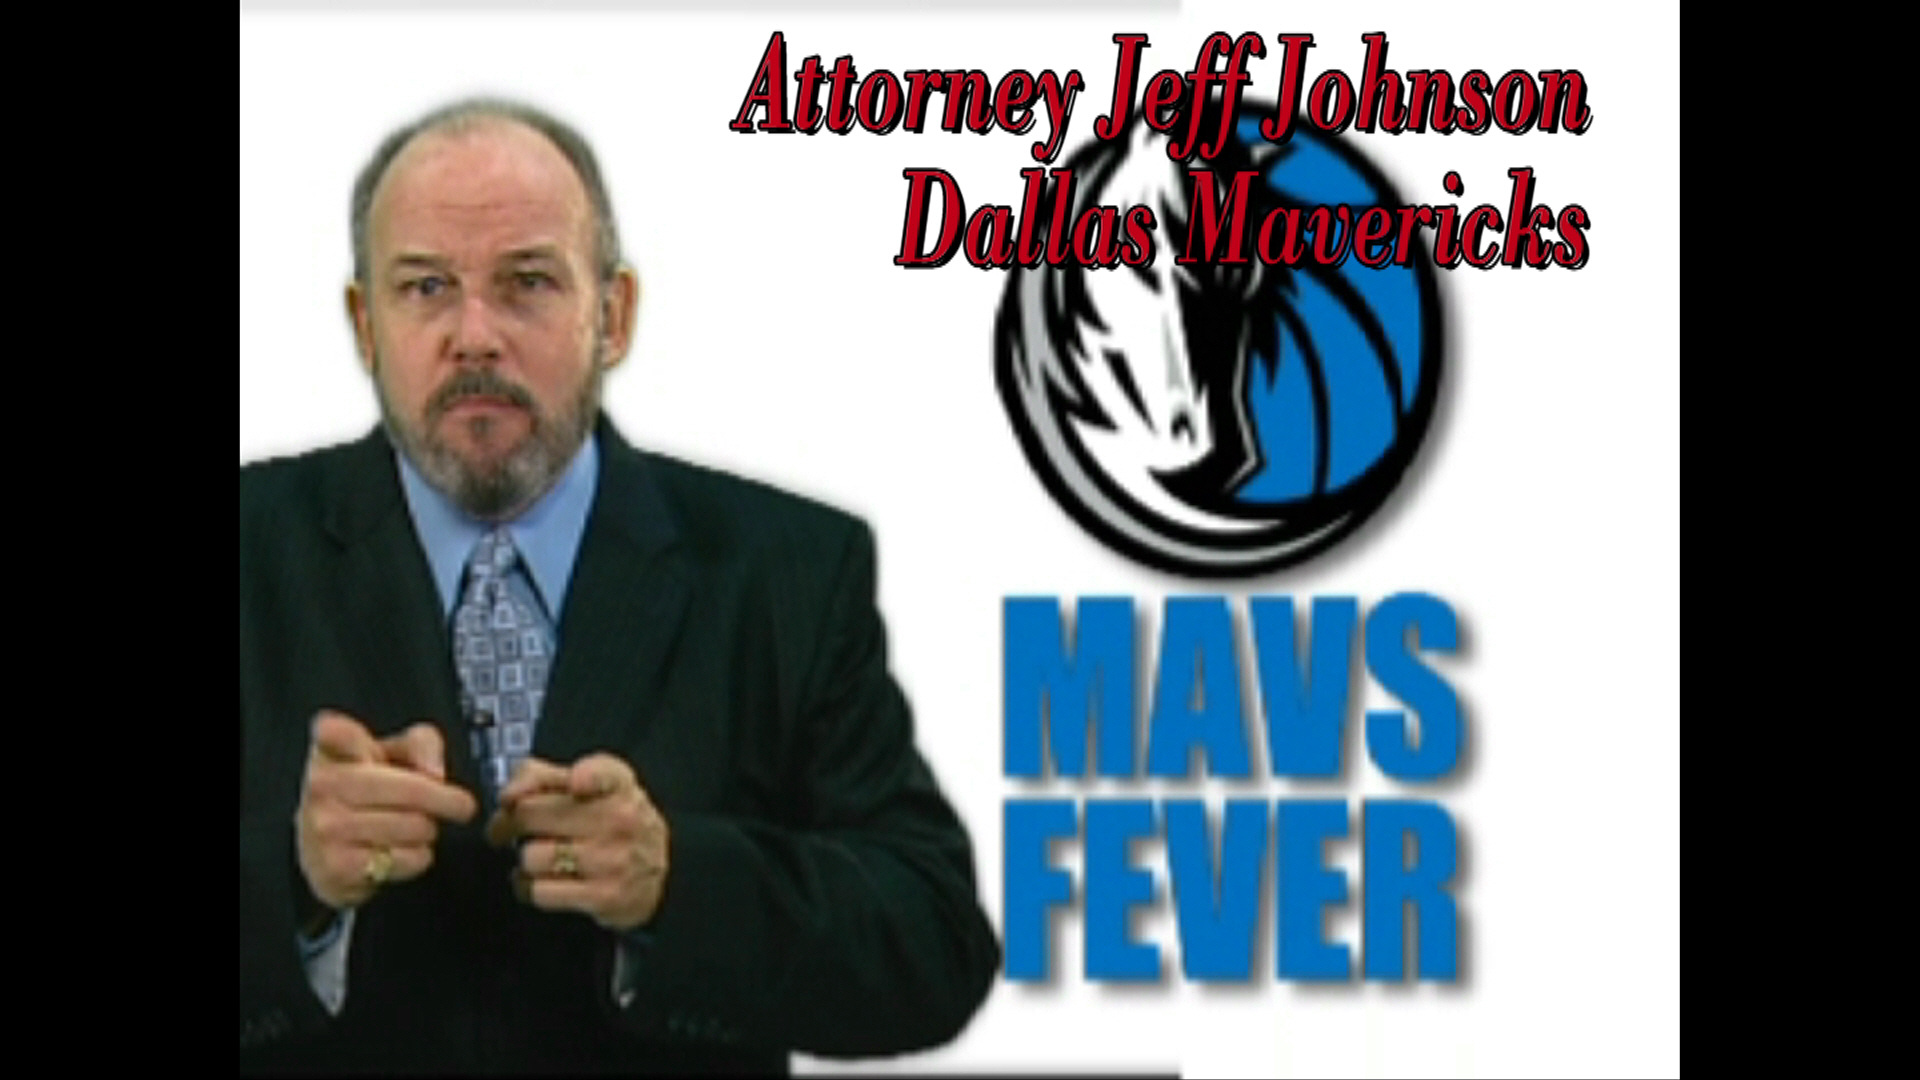 Dallas Mavericks Commercial as Attorney Jeff Johnson